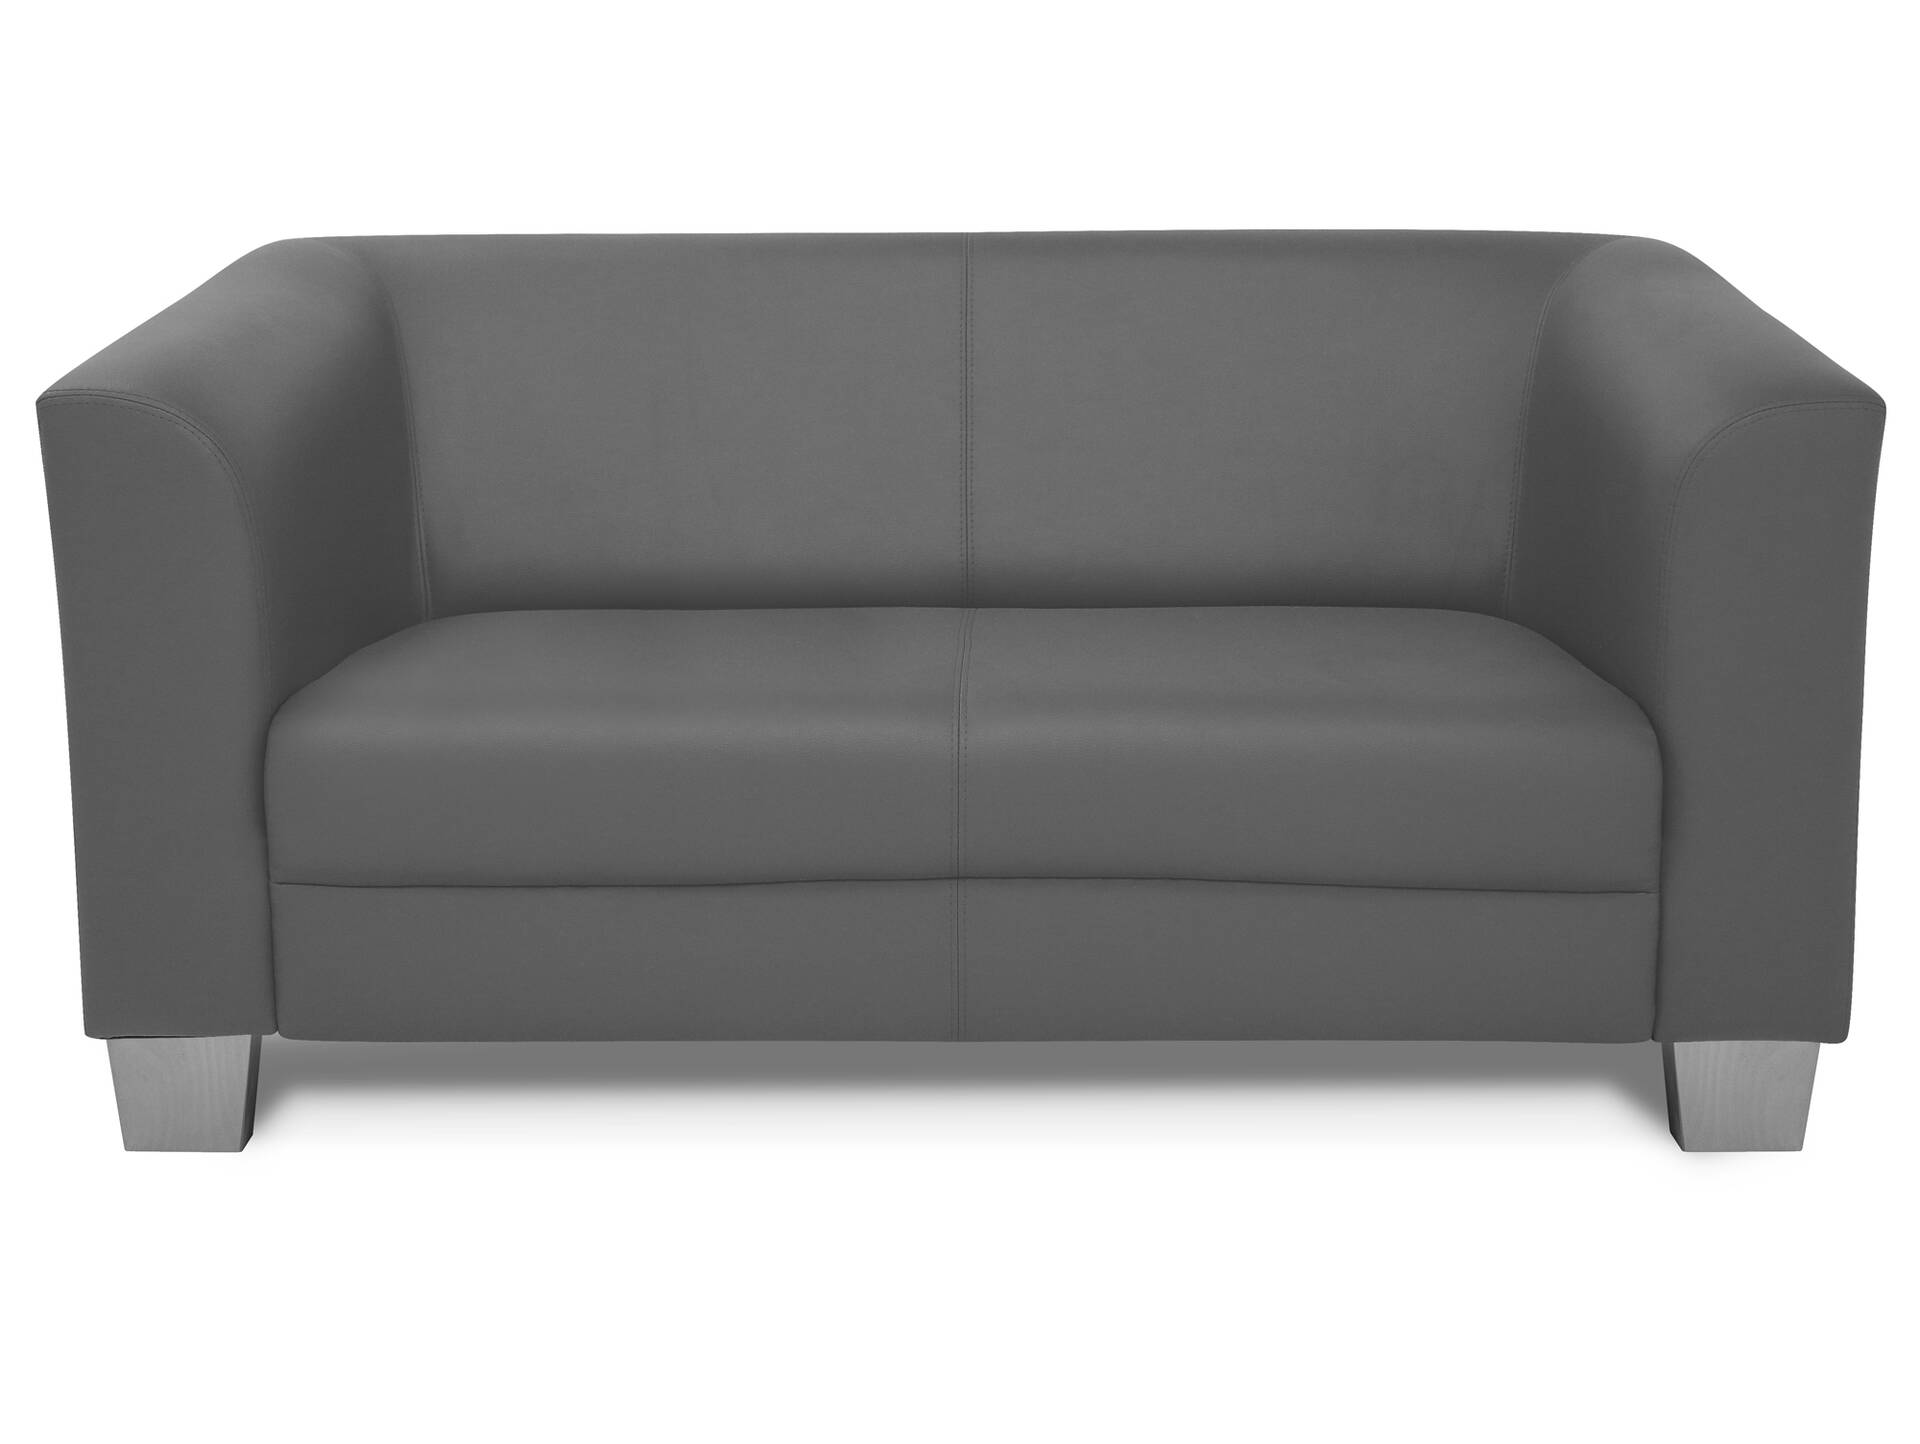 CHICAGO 2-Sitzer Sofa, Material Kunstleder grau